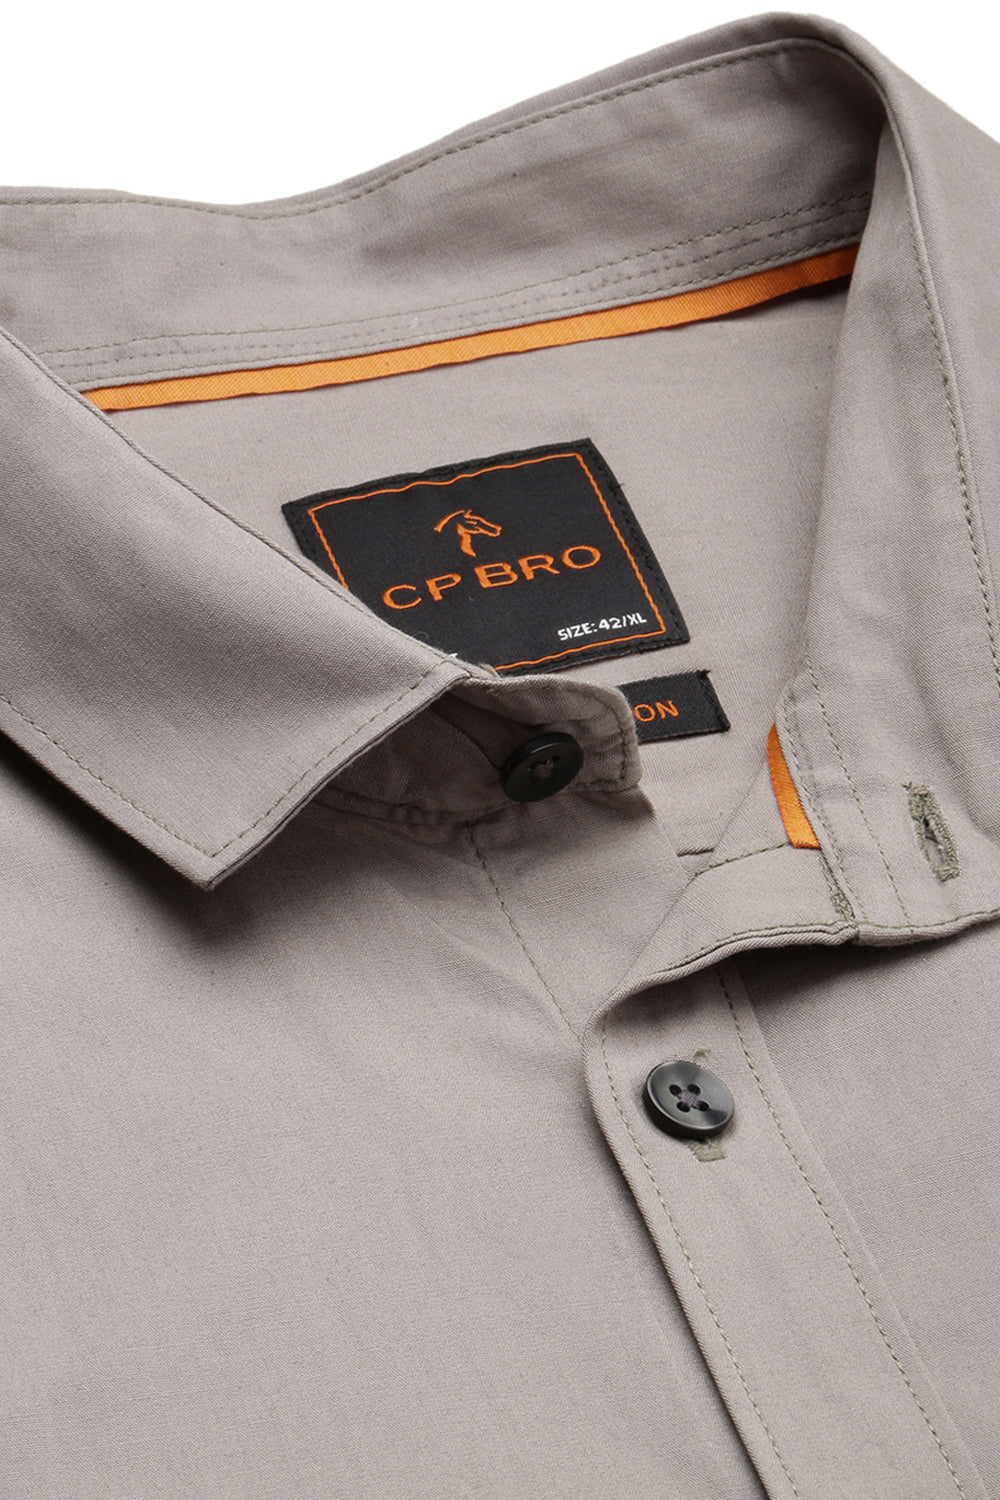 CP BRO Men's Cotton Full Sleeve Solid Slim Fit Collar Neck Cream Color Woven Shirt | Sbo1-58 A